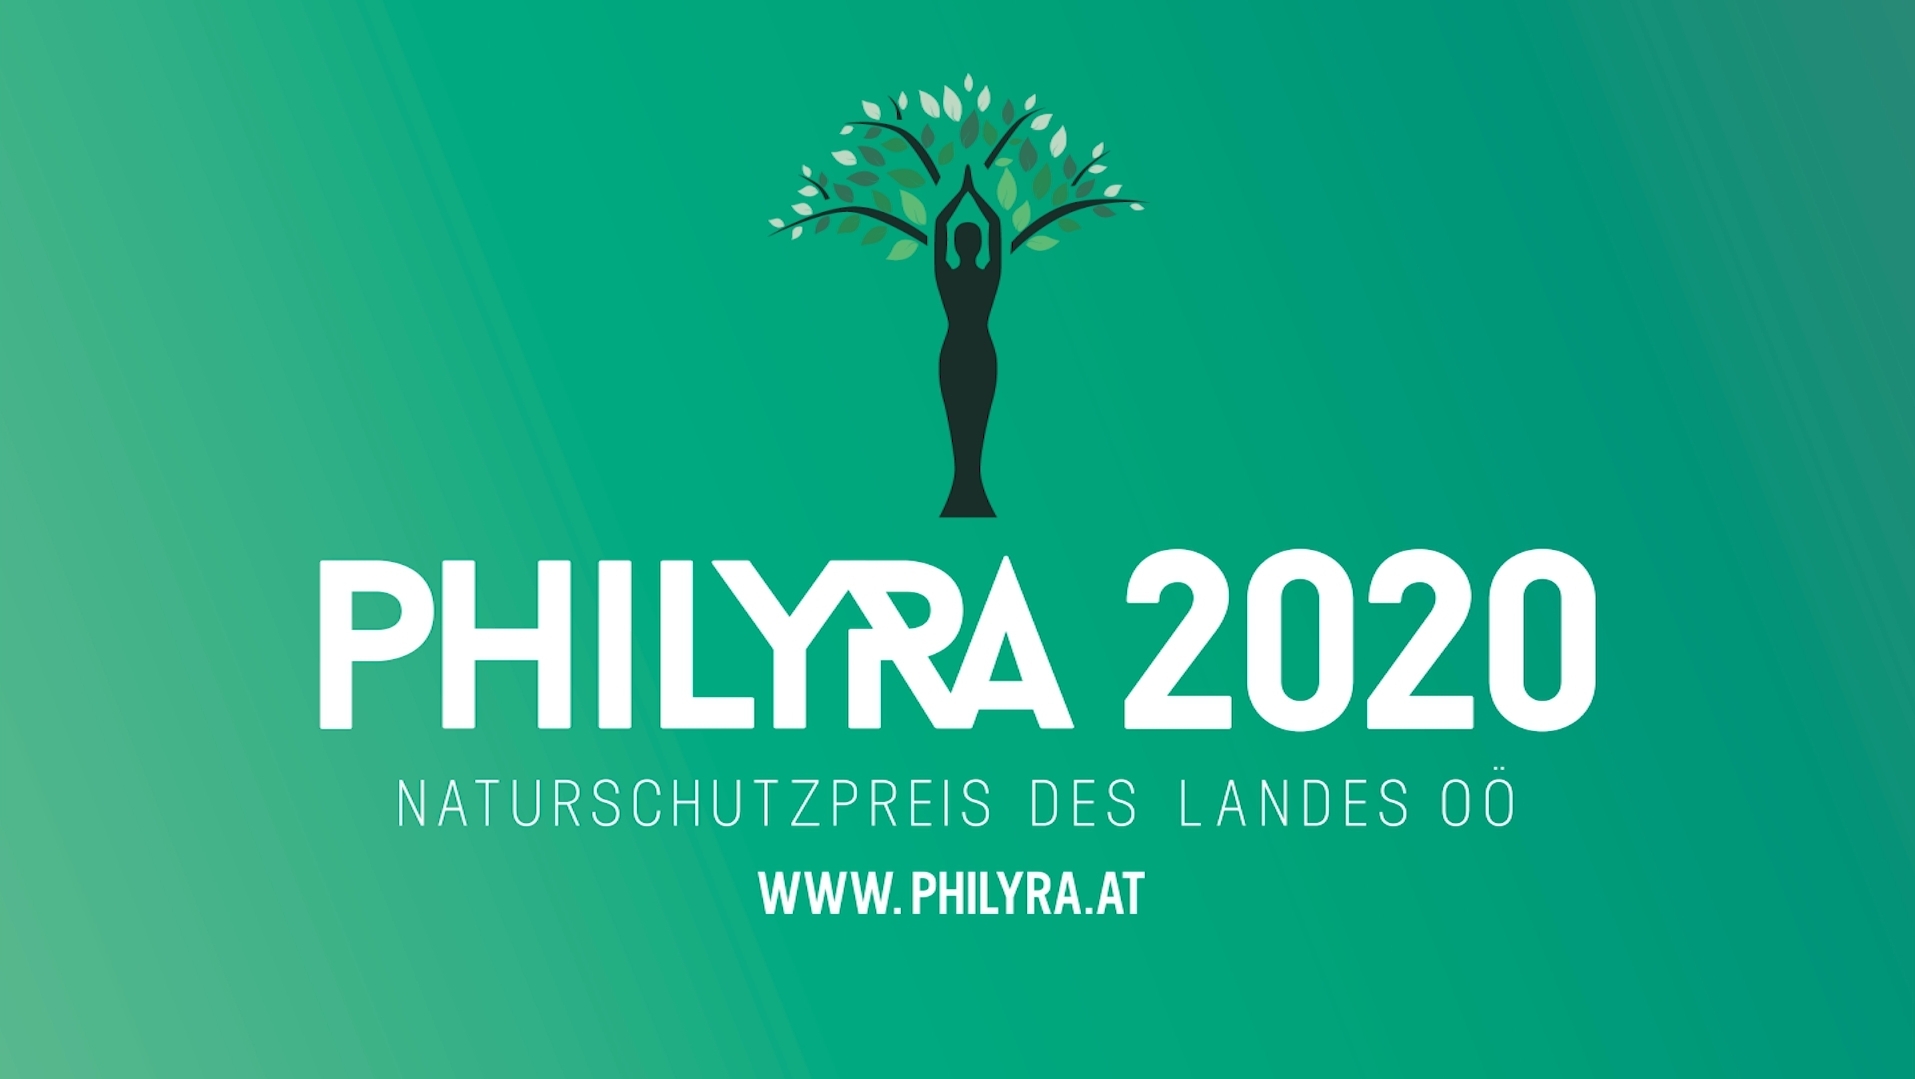 Philyra - Naturschutzpreis